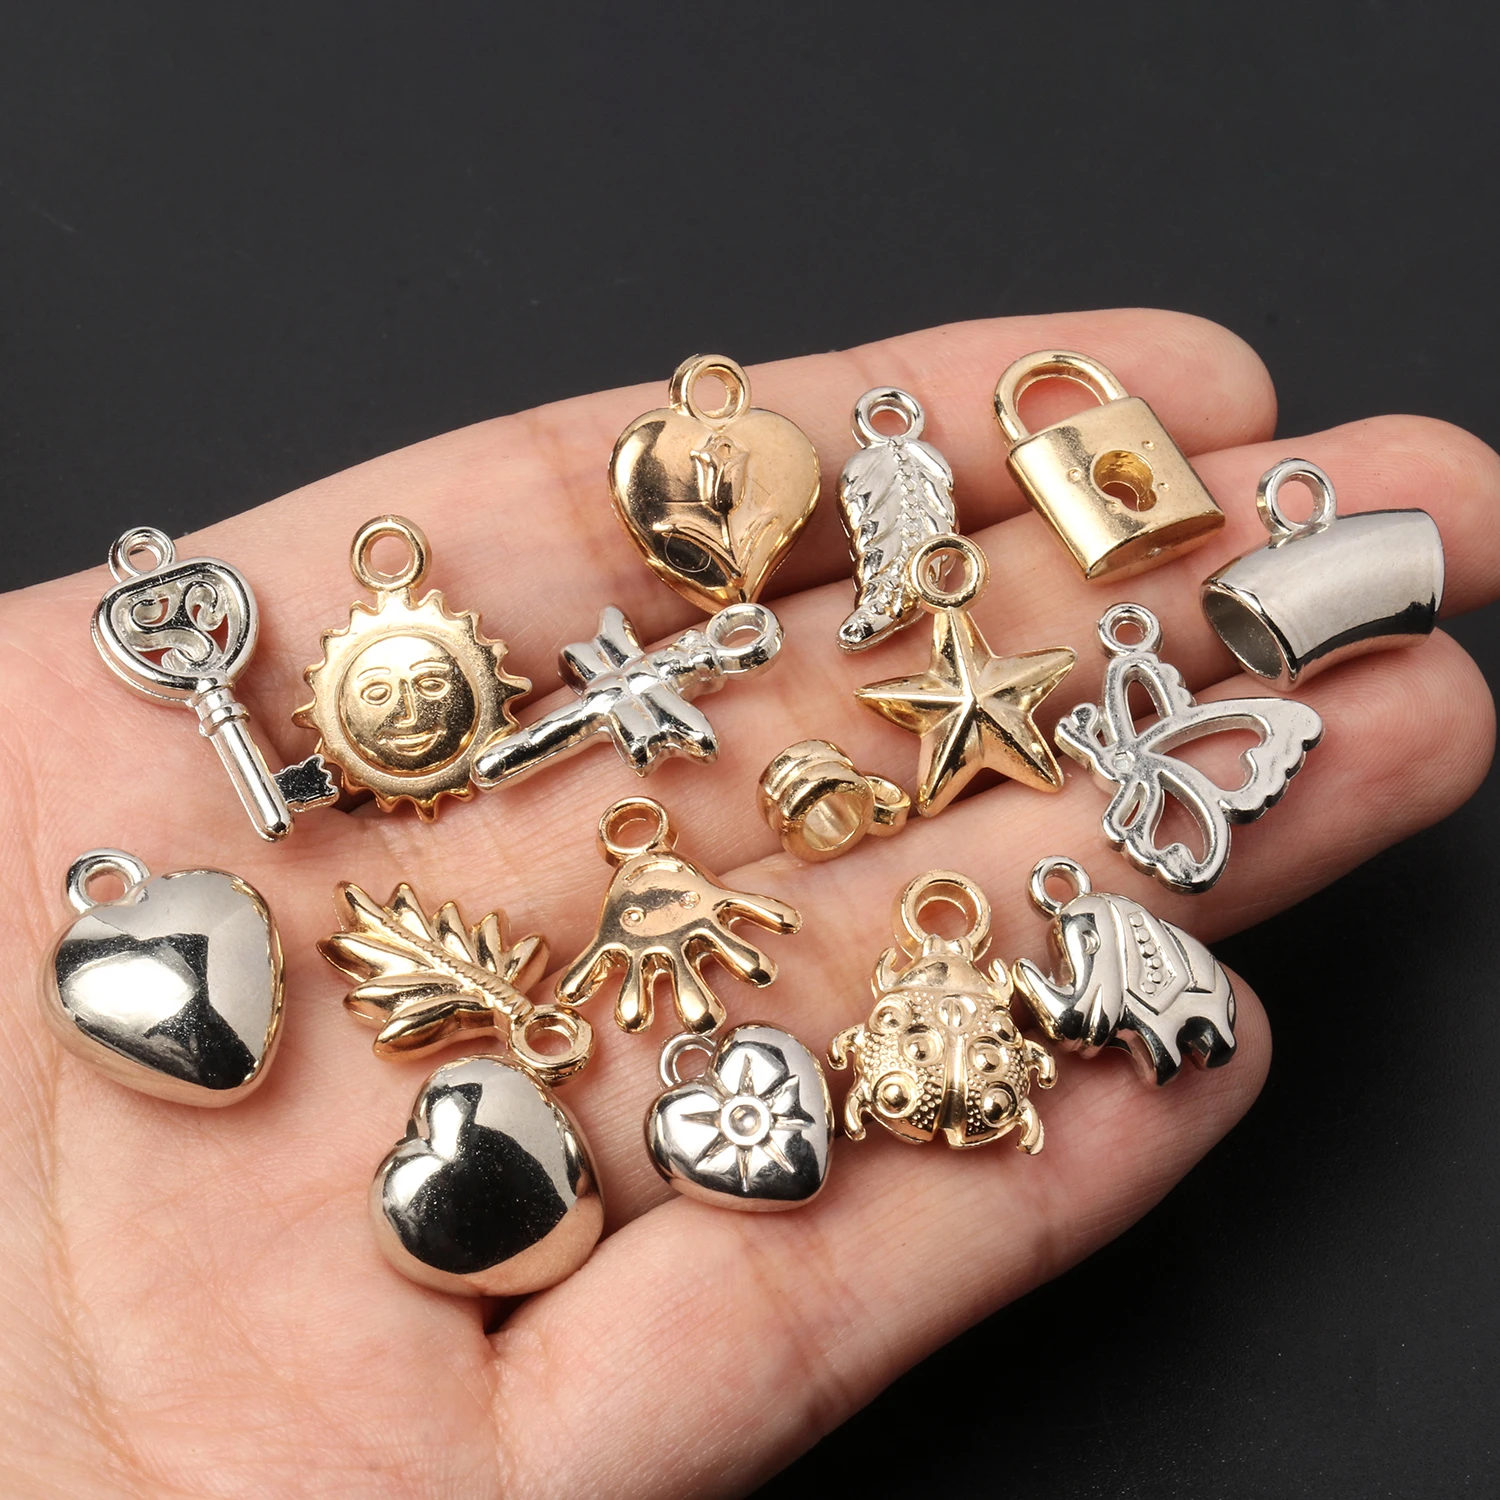 100pcs Random Styles Mixed Bulk Lots Charms For Jewelry Making Supplies DIY Bracelet  Necklace Earring Keychain Pendant Wholesale - AliExpress